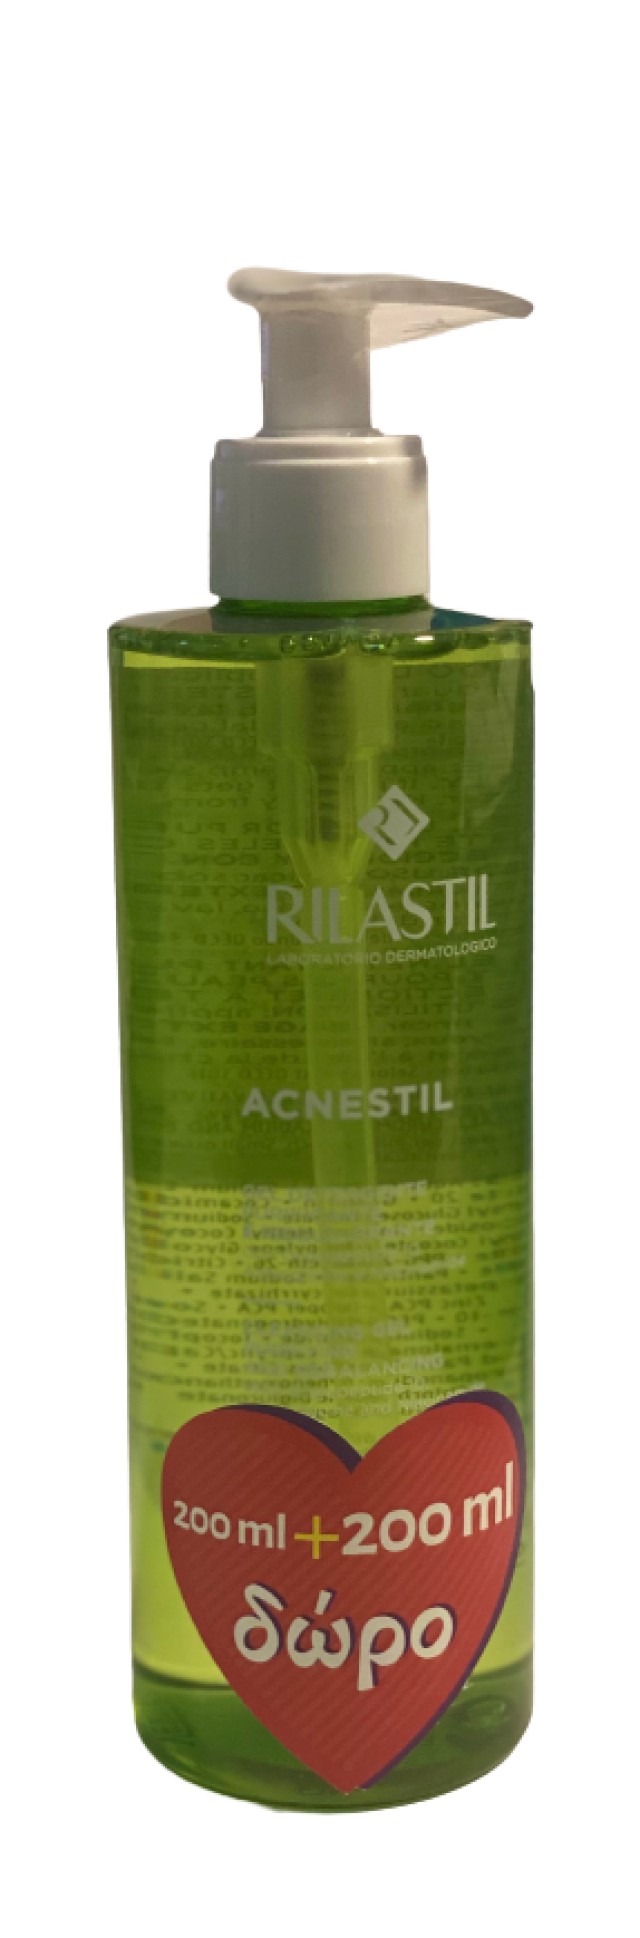 Rilastil Acnestil Cleansing Gel Καθαριστικό Τζελ για Μικτές - Λιπαρές με Τάση Ακμής Επιδερμίδες 400ml [200ml + ΔΩΡΟ 200ml]